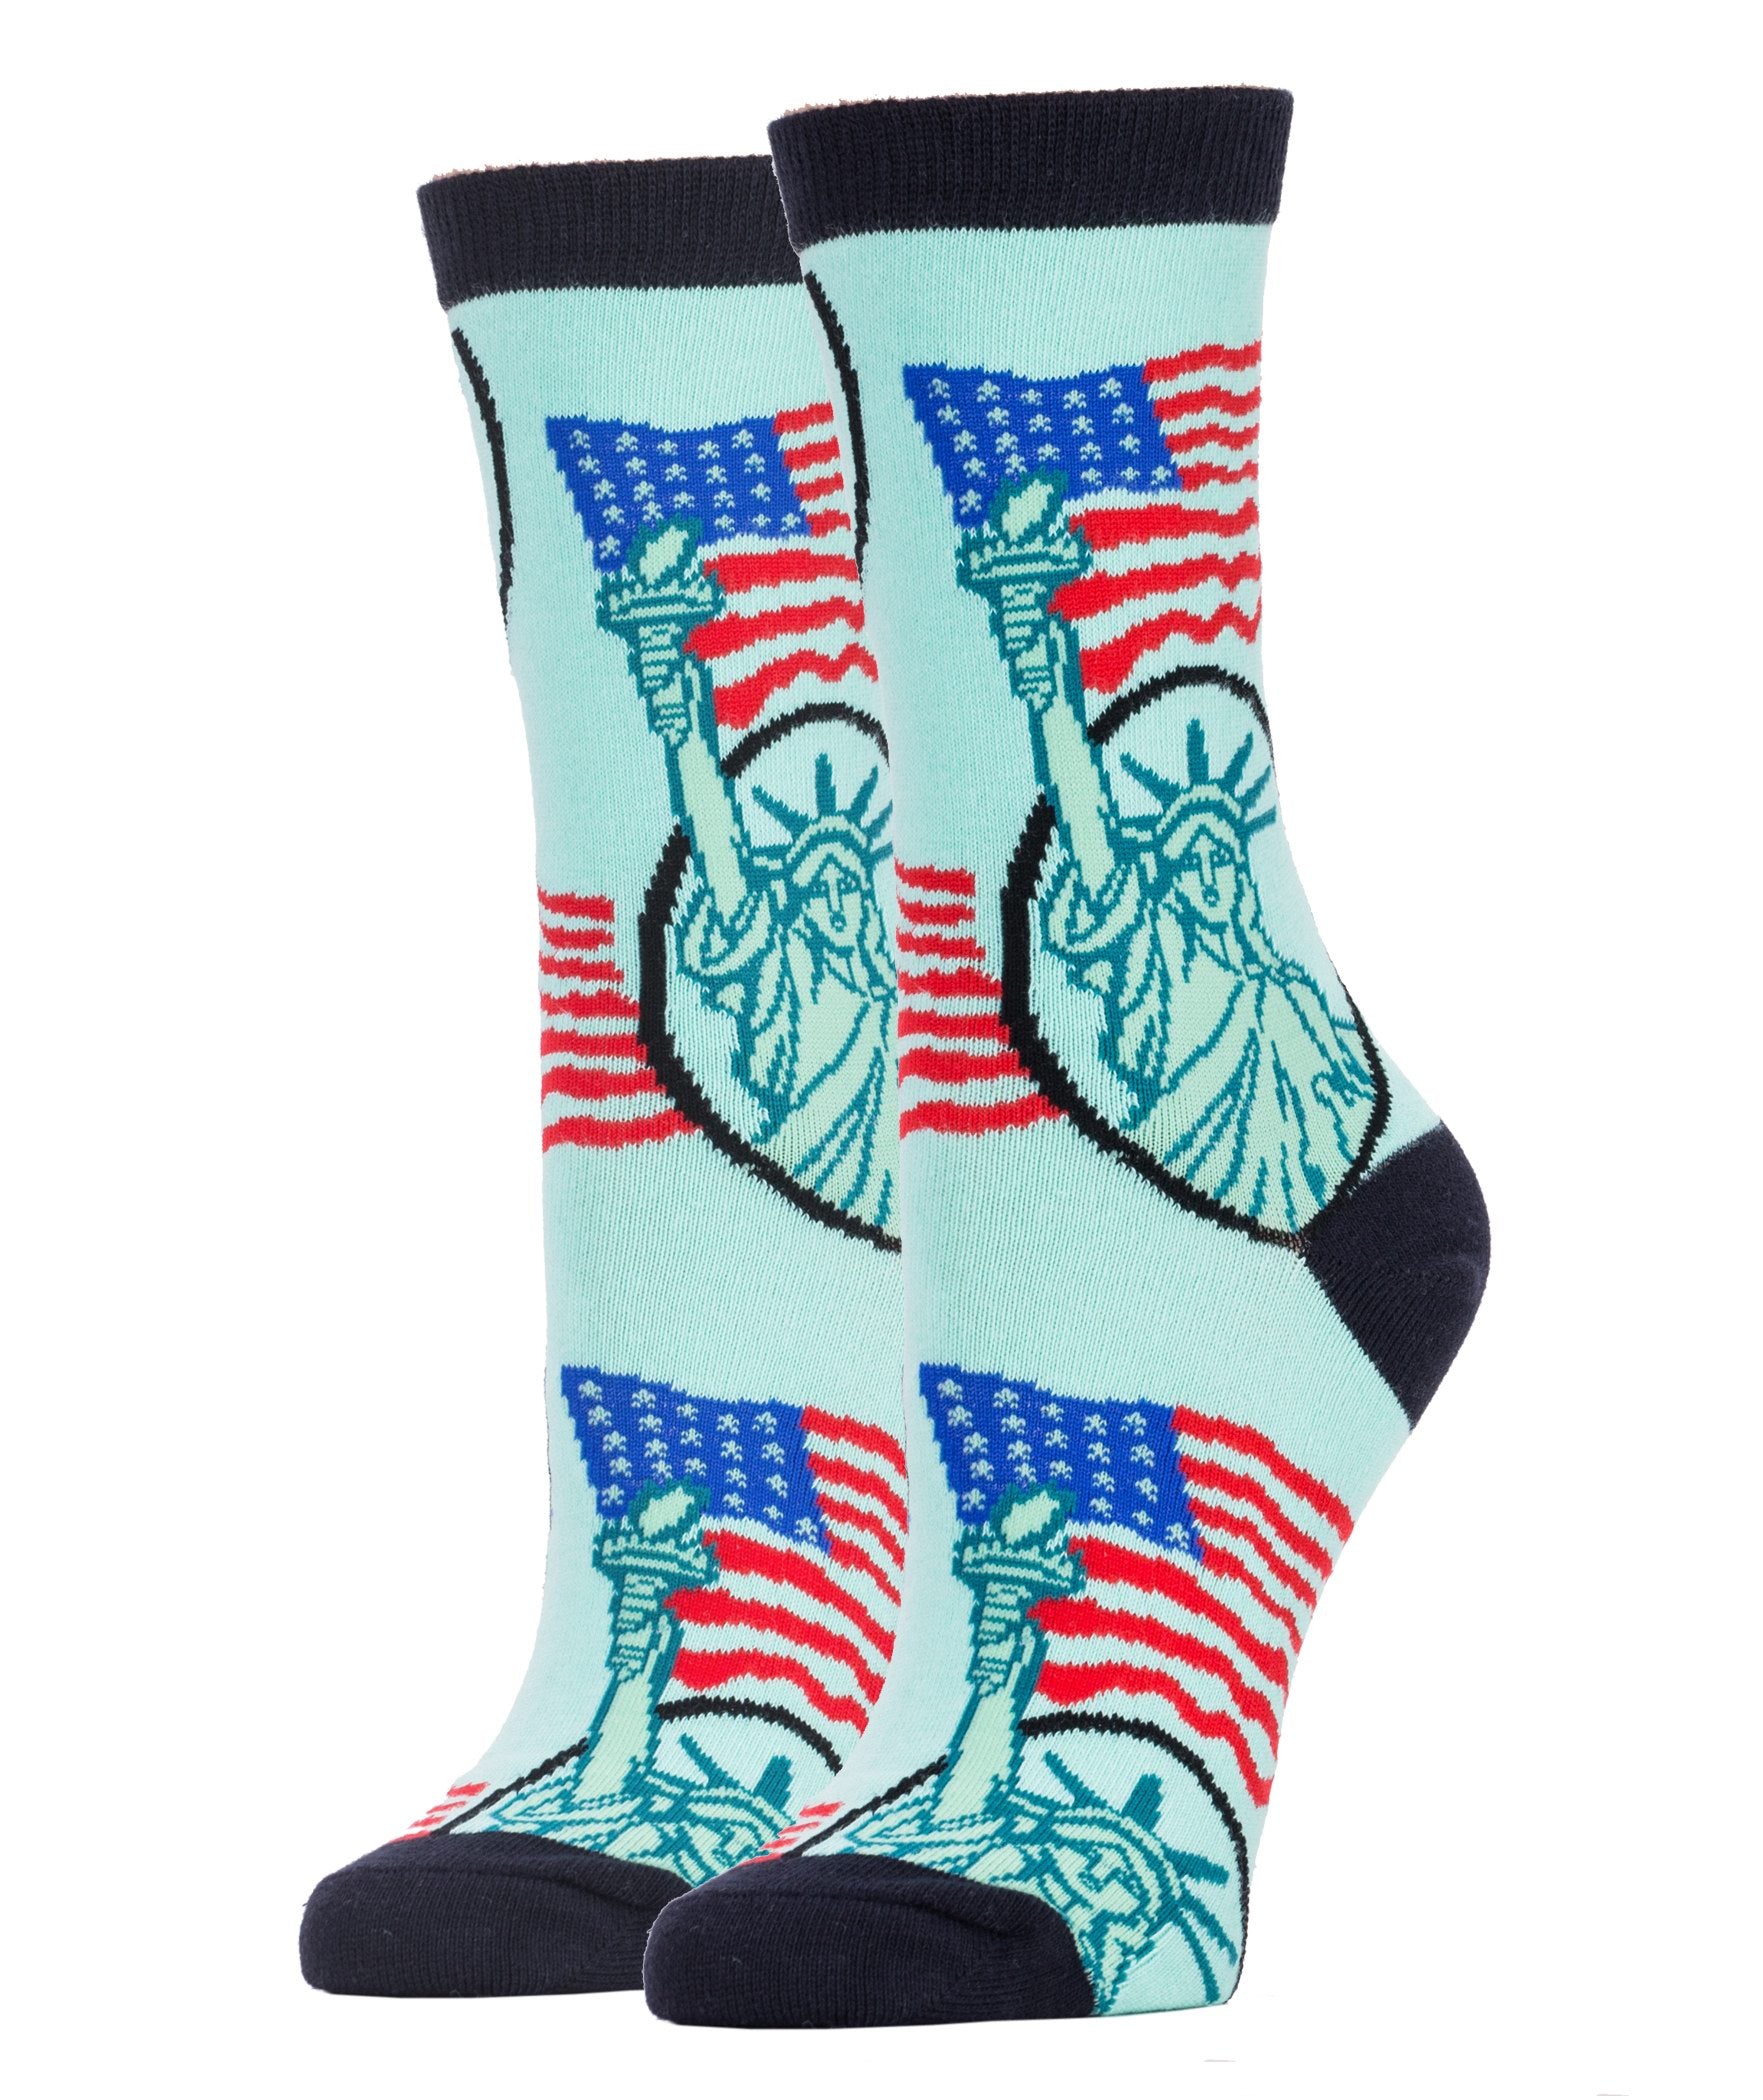 Lady Liberty Socks | Novelty Crew Socks For Women